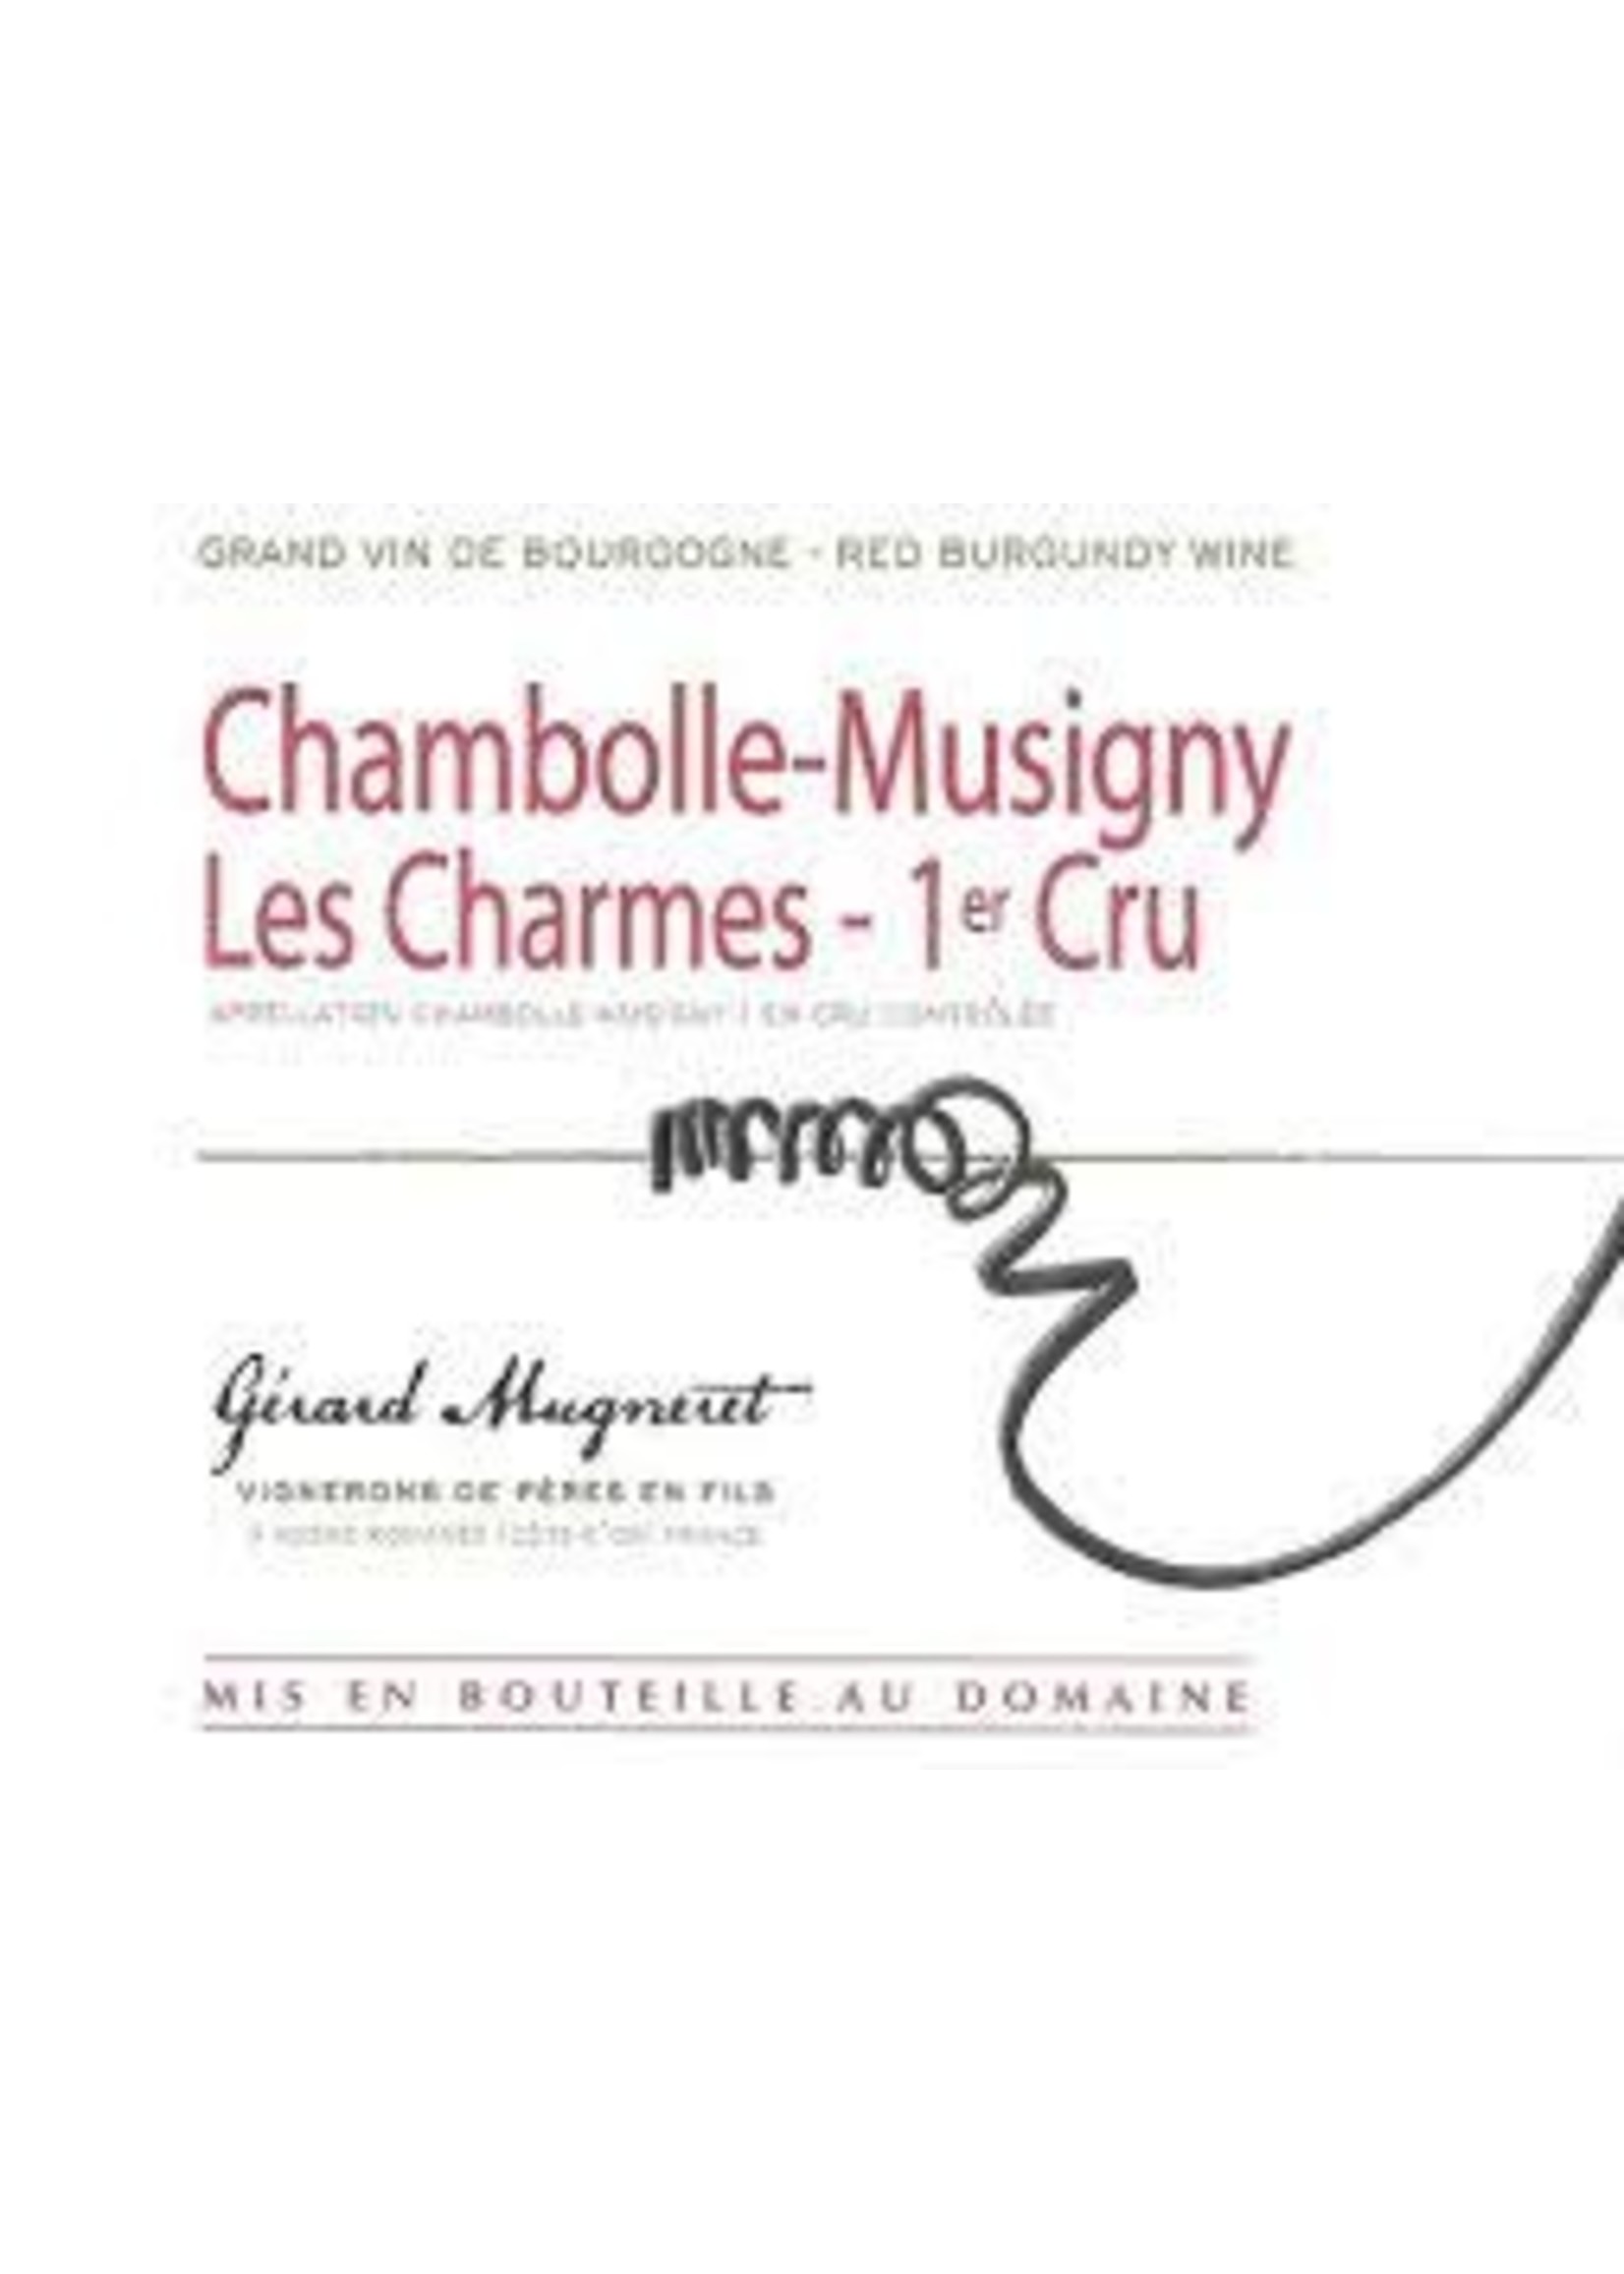 Gerard Mugneret 2018 Chambolle Musigny 1er Cru Les Charmes 750ml